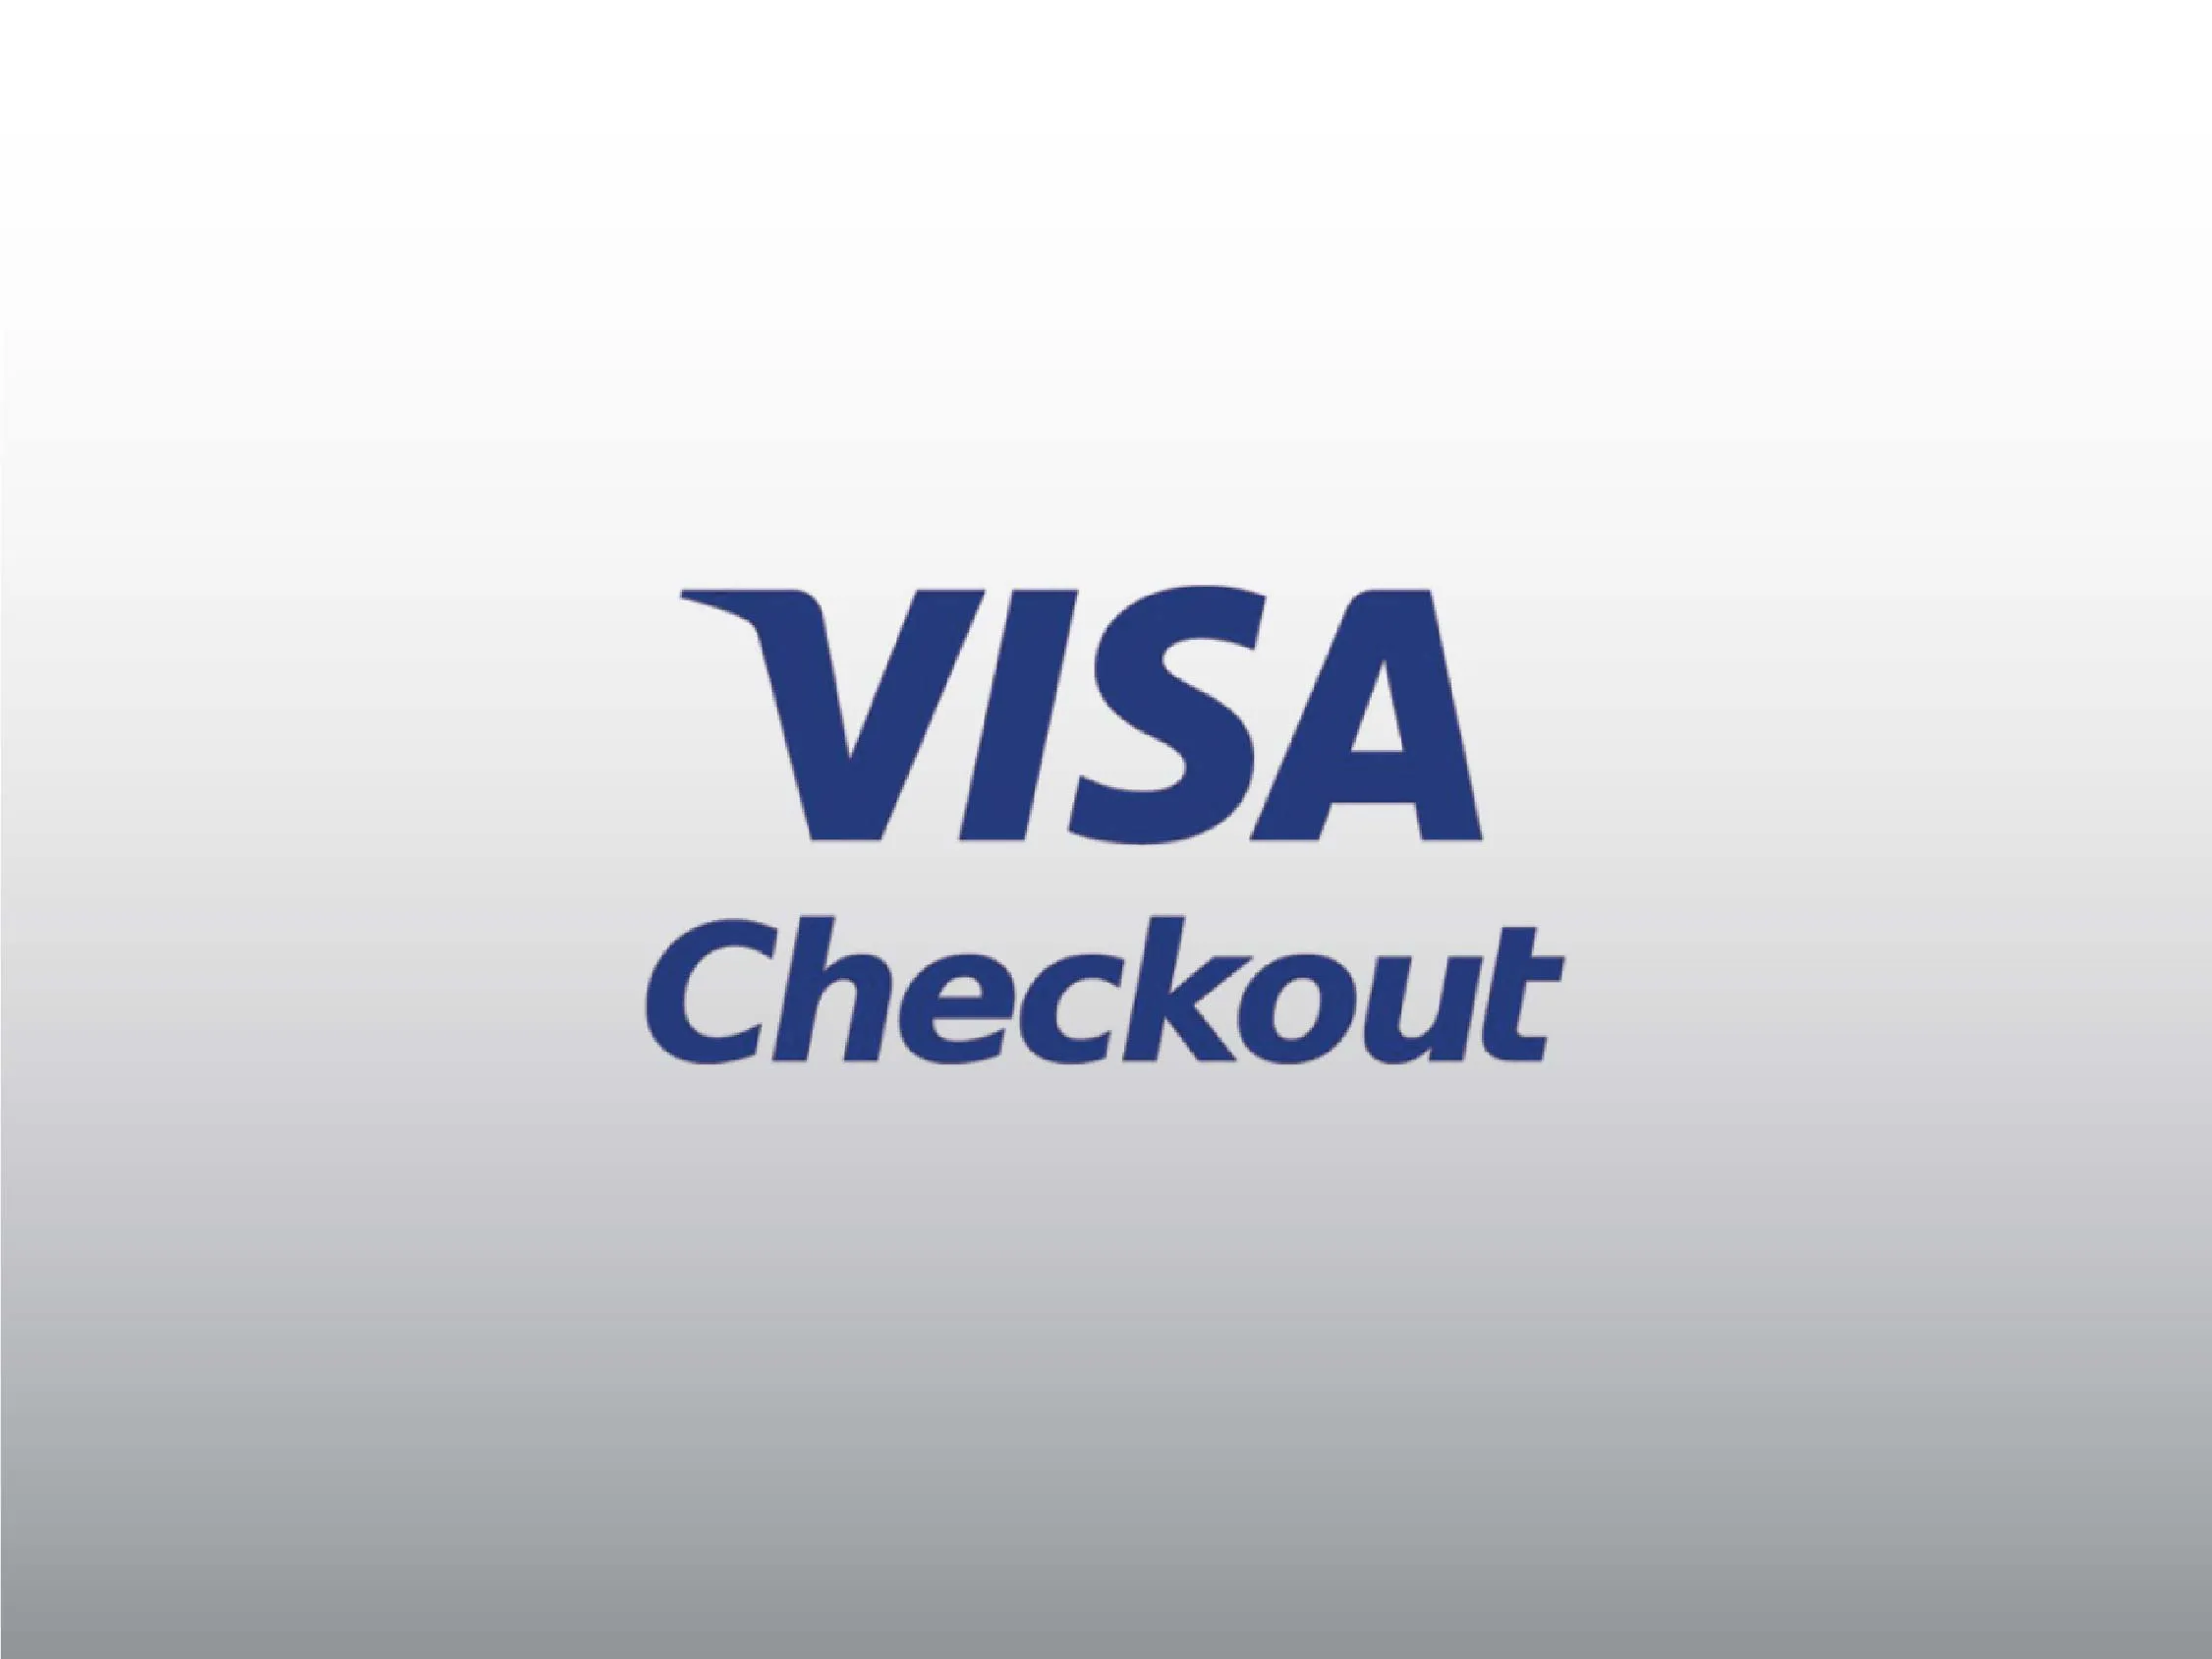 Visa Checkout service's logo